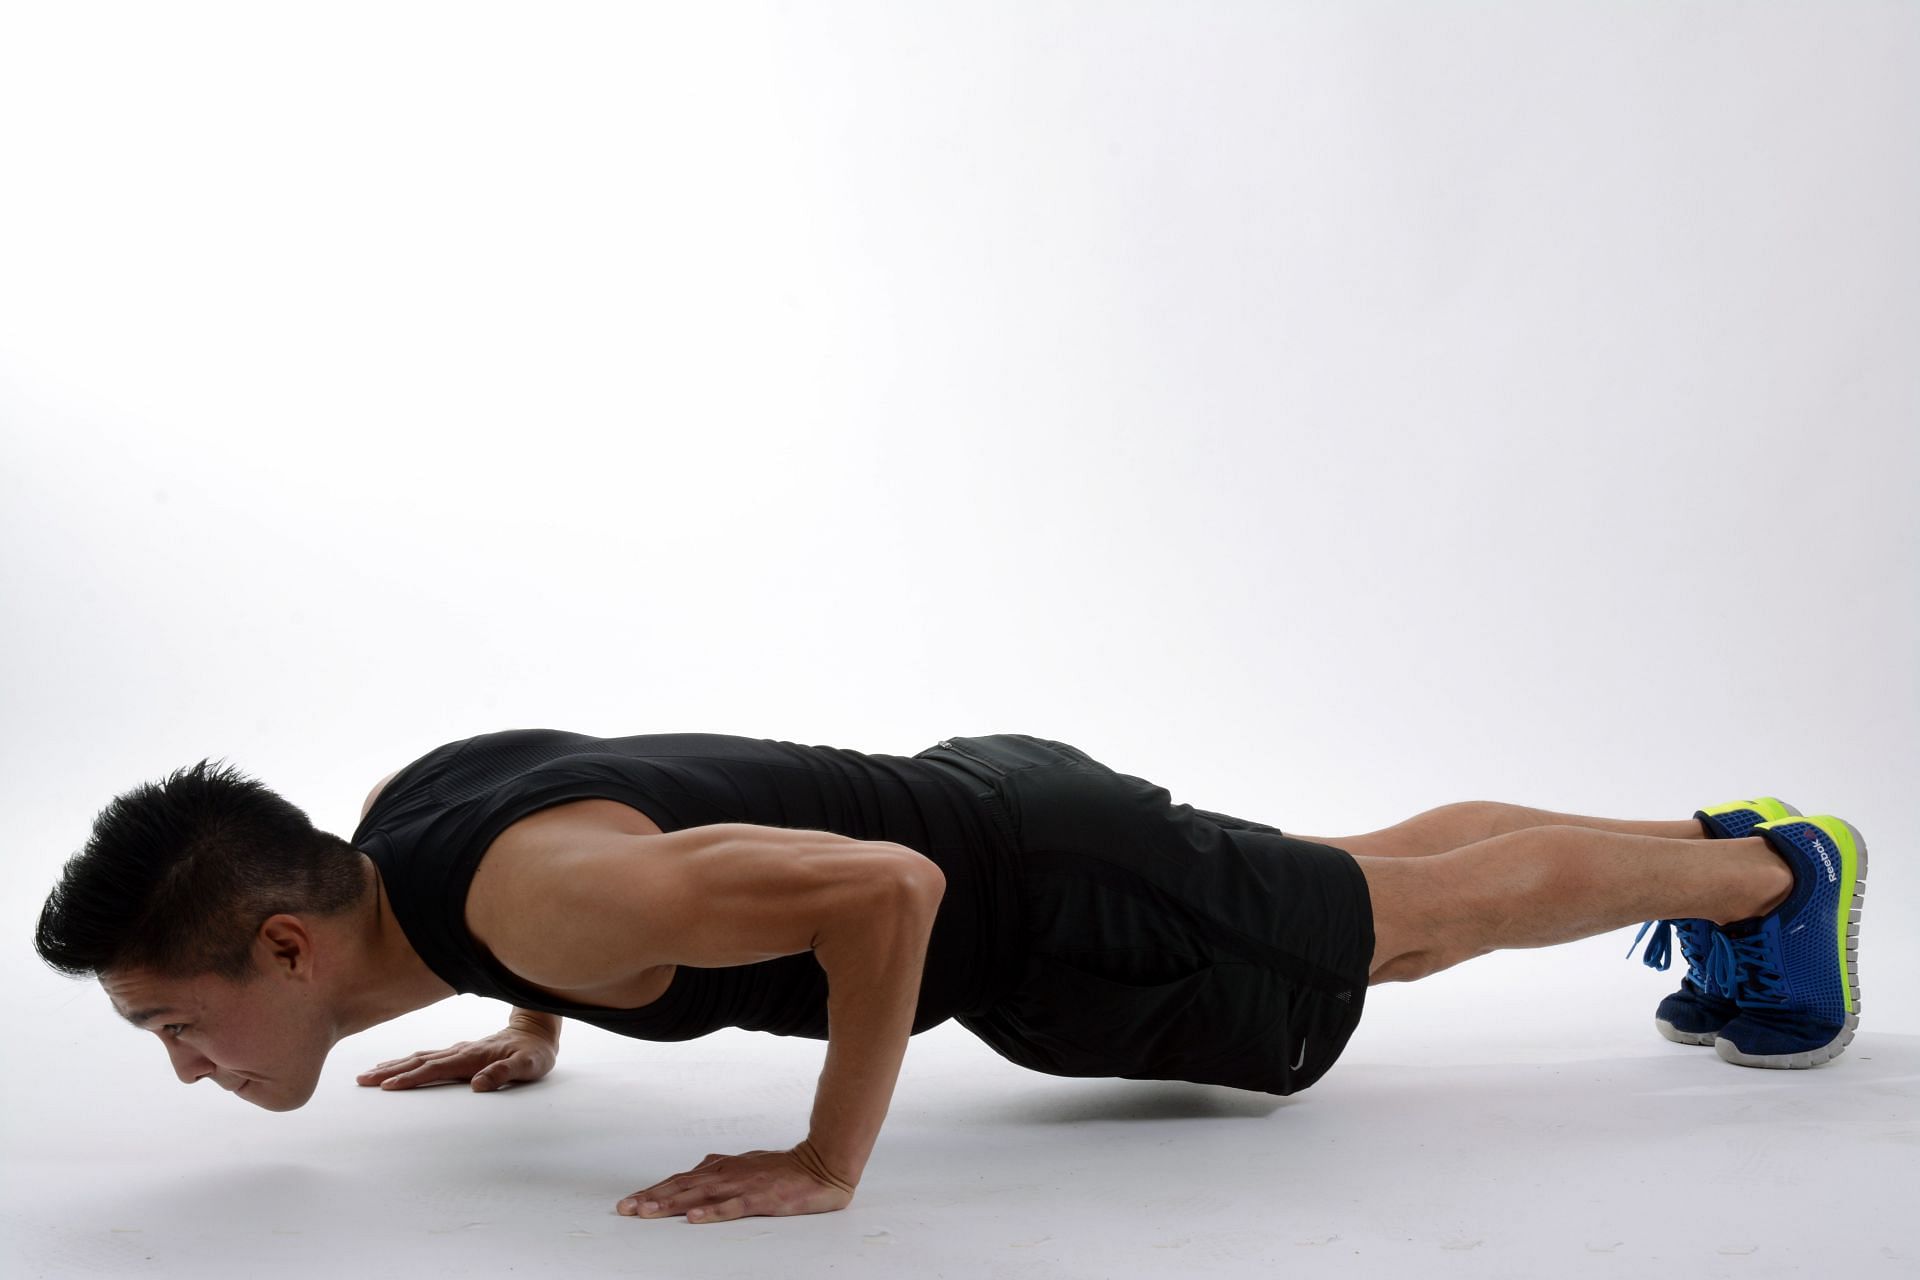 Inchworm exercise strengthens your back and core. (Image via Pexels / Keji Yoshiki)